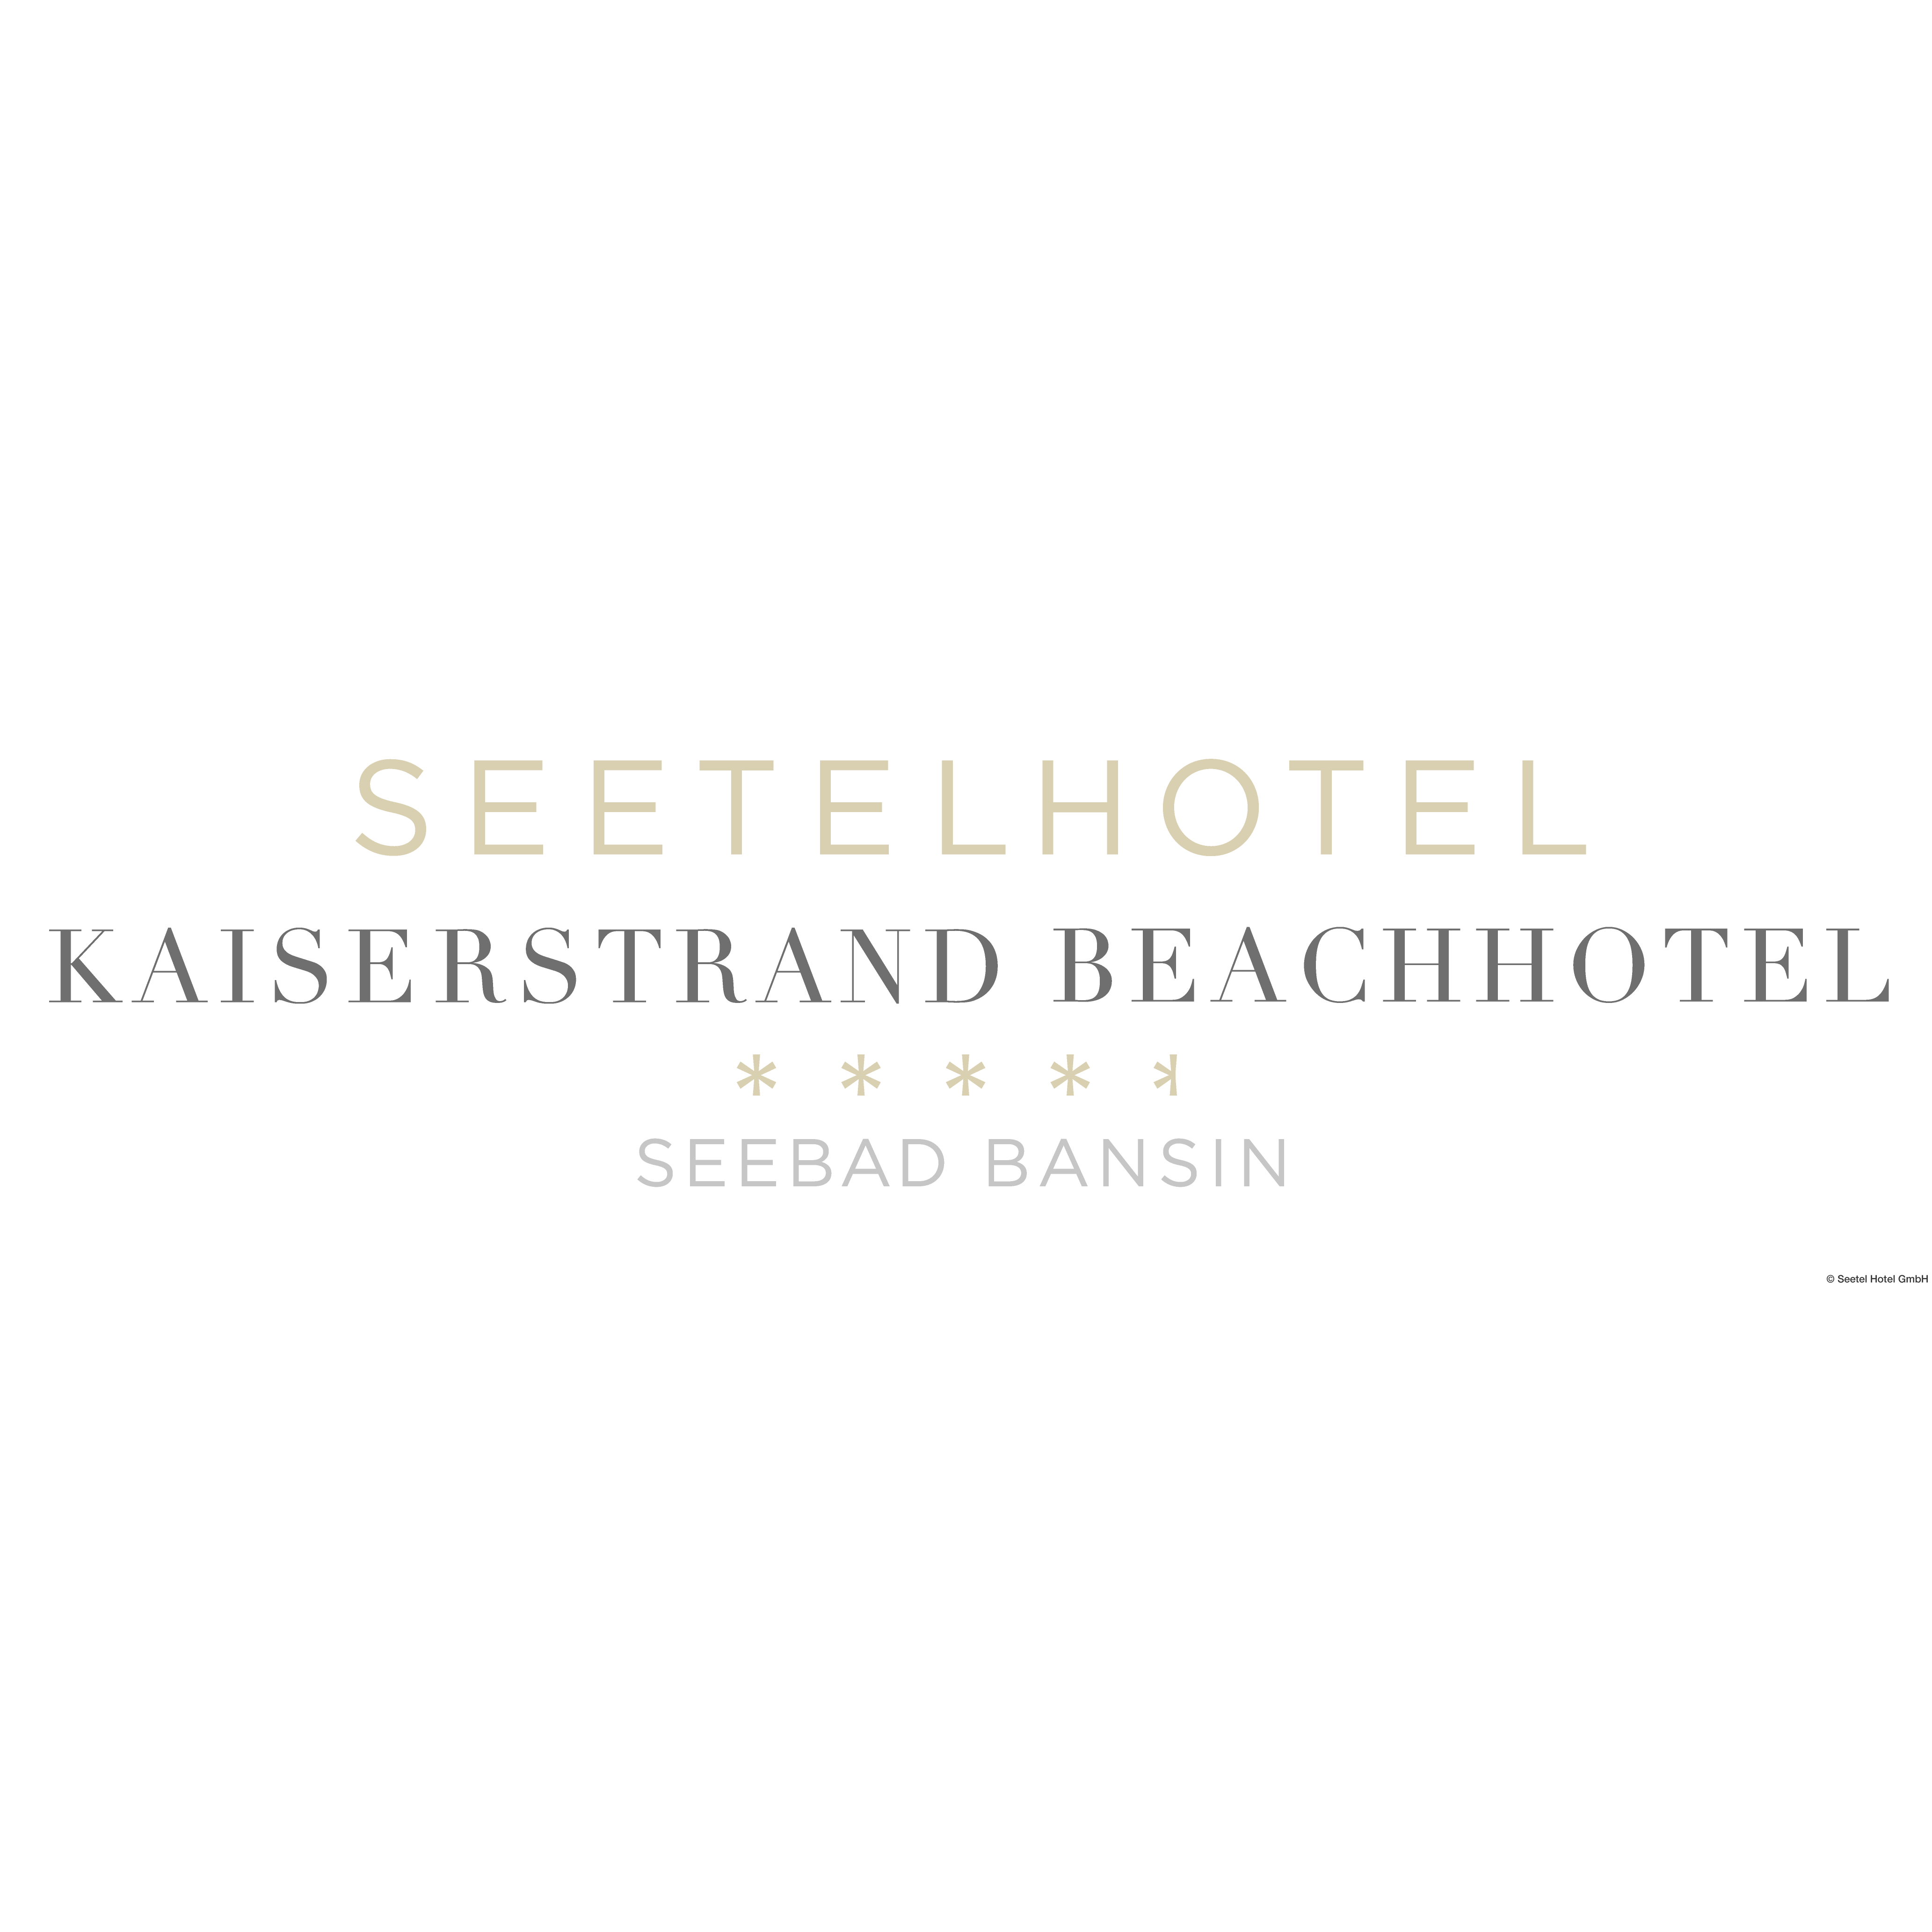 SEETELHOTEL Kaiserstrand Beachhotel - Logo